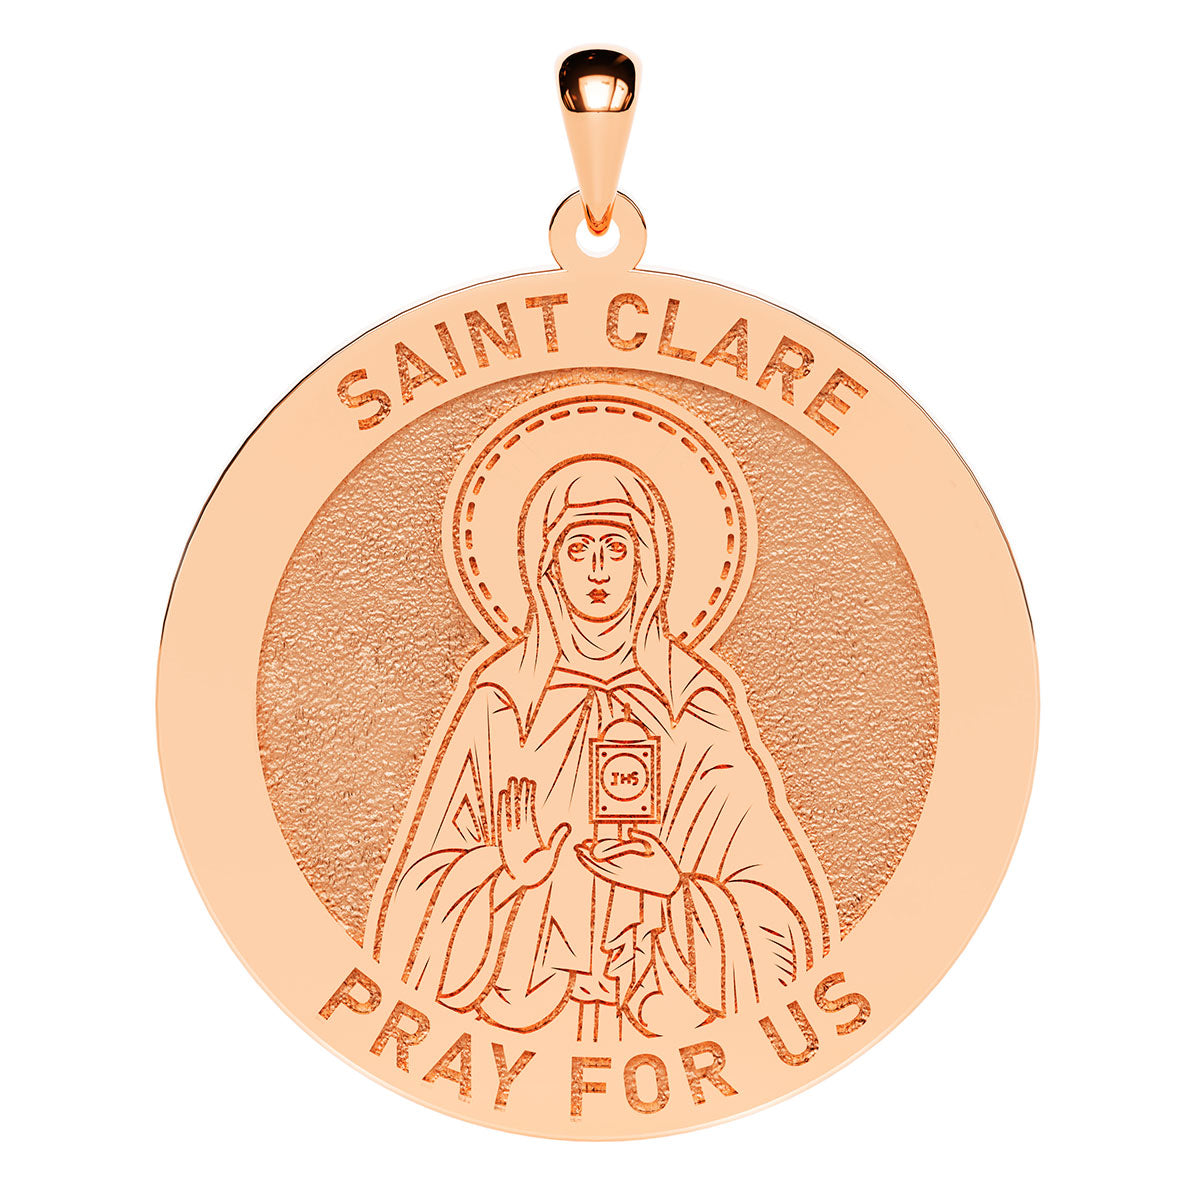 Saint Clare Round Religious Medal